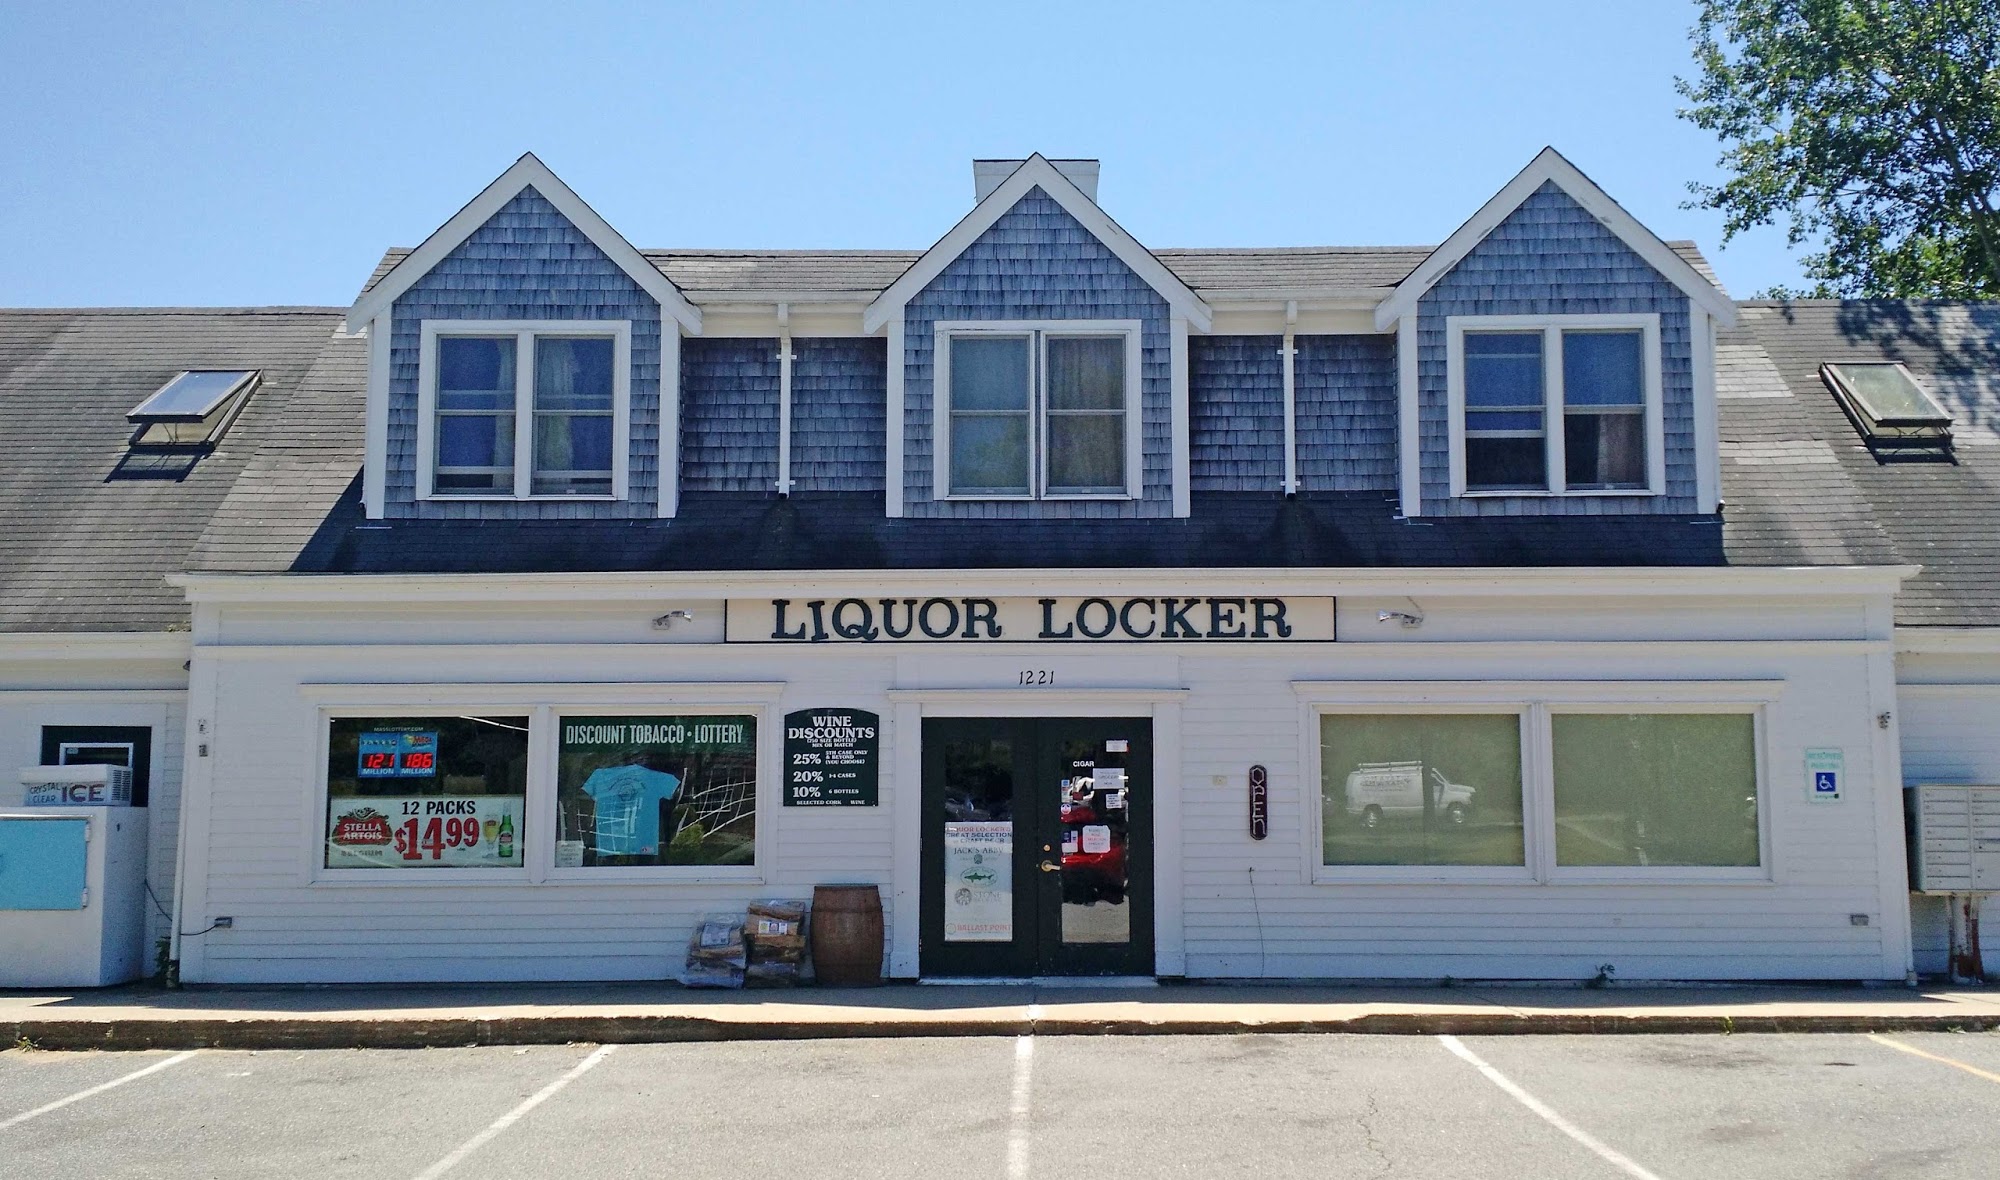 Chatham Liquor Locker